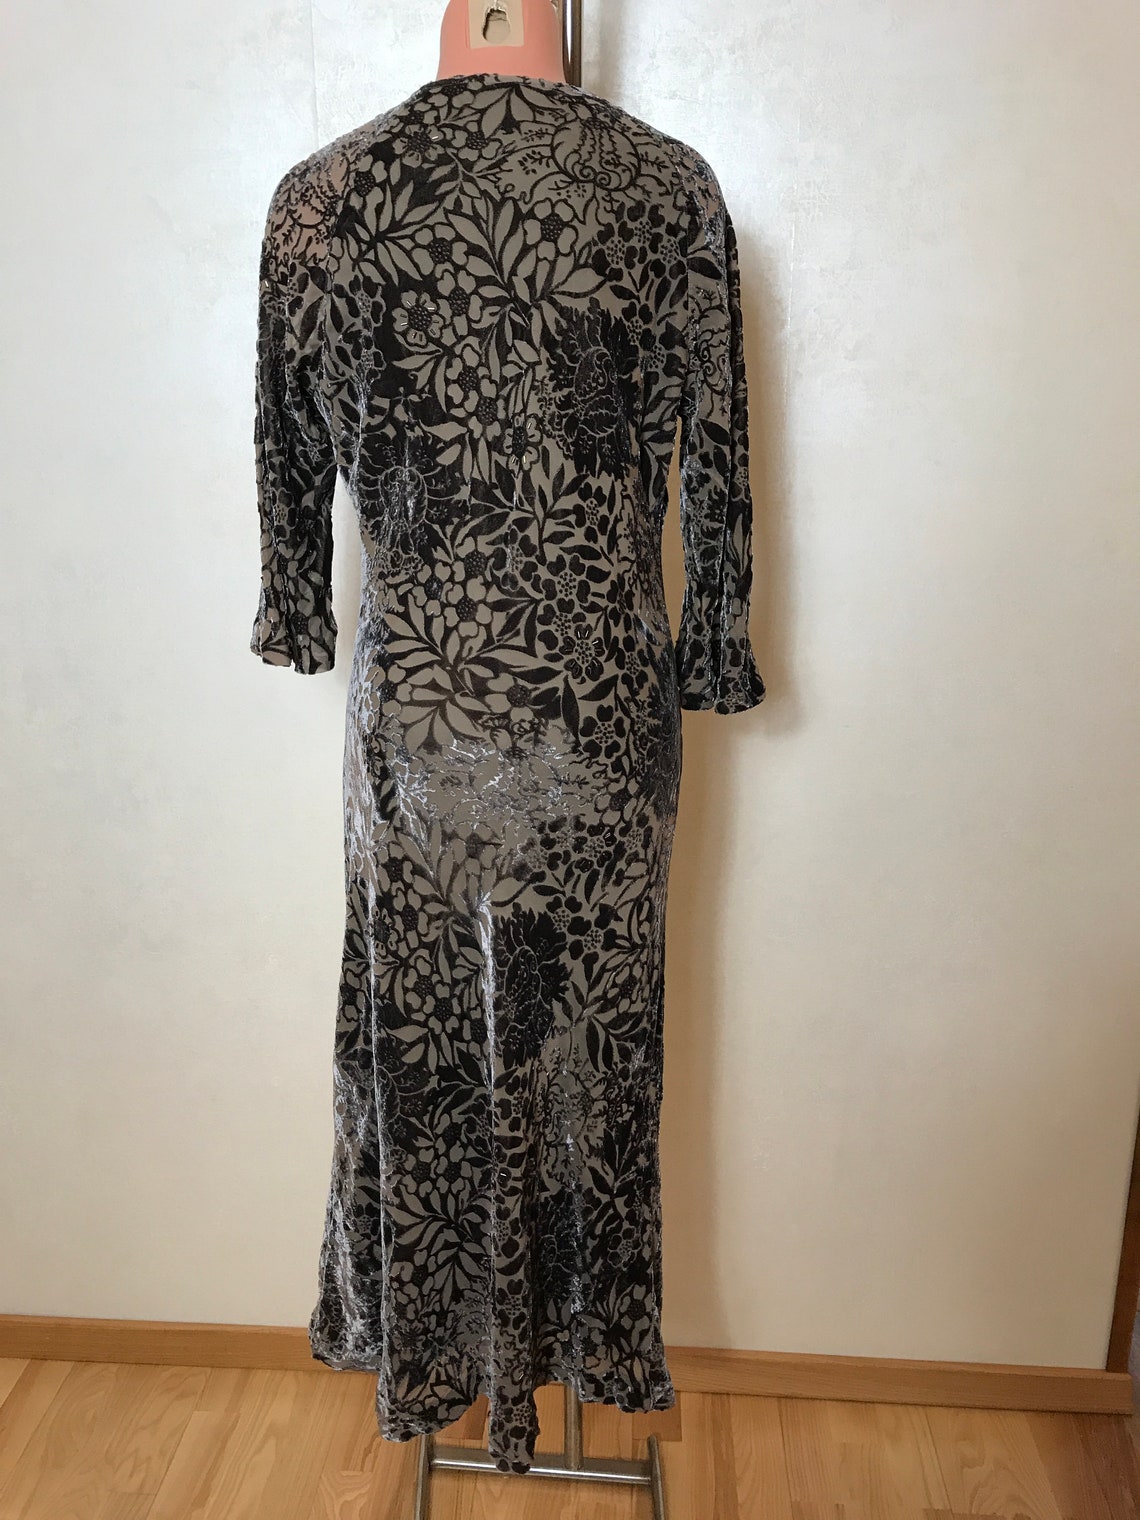 Brown vintage dress devore fabric floral pattern maxi | Etsy